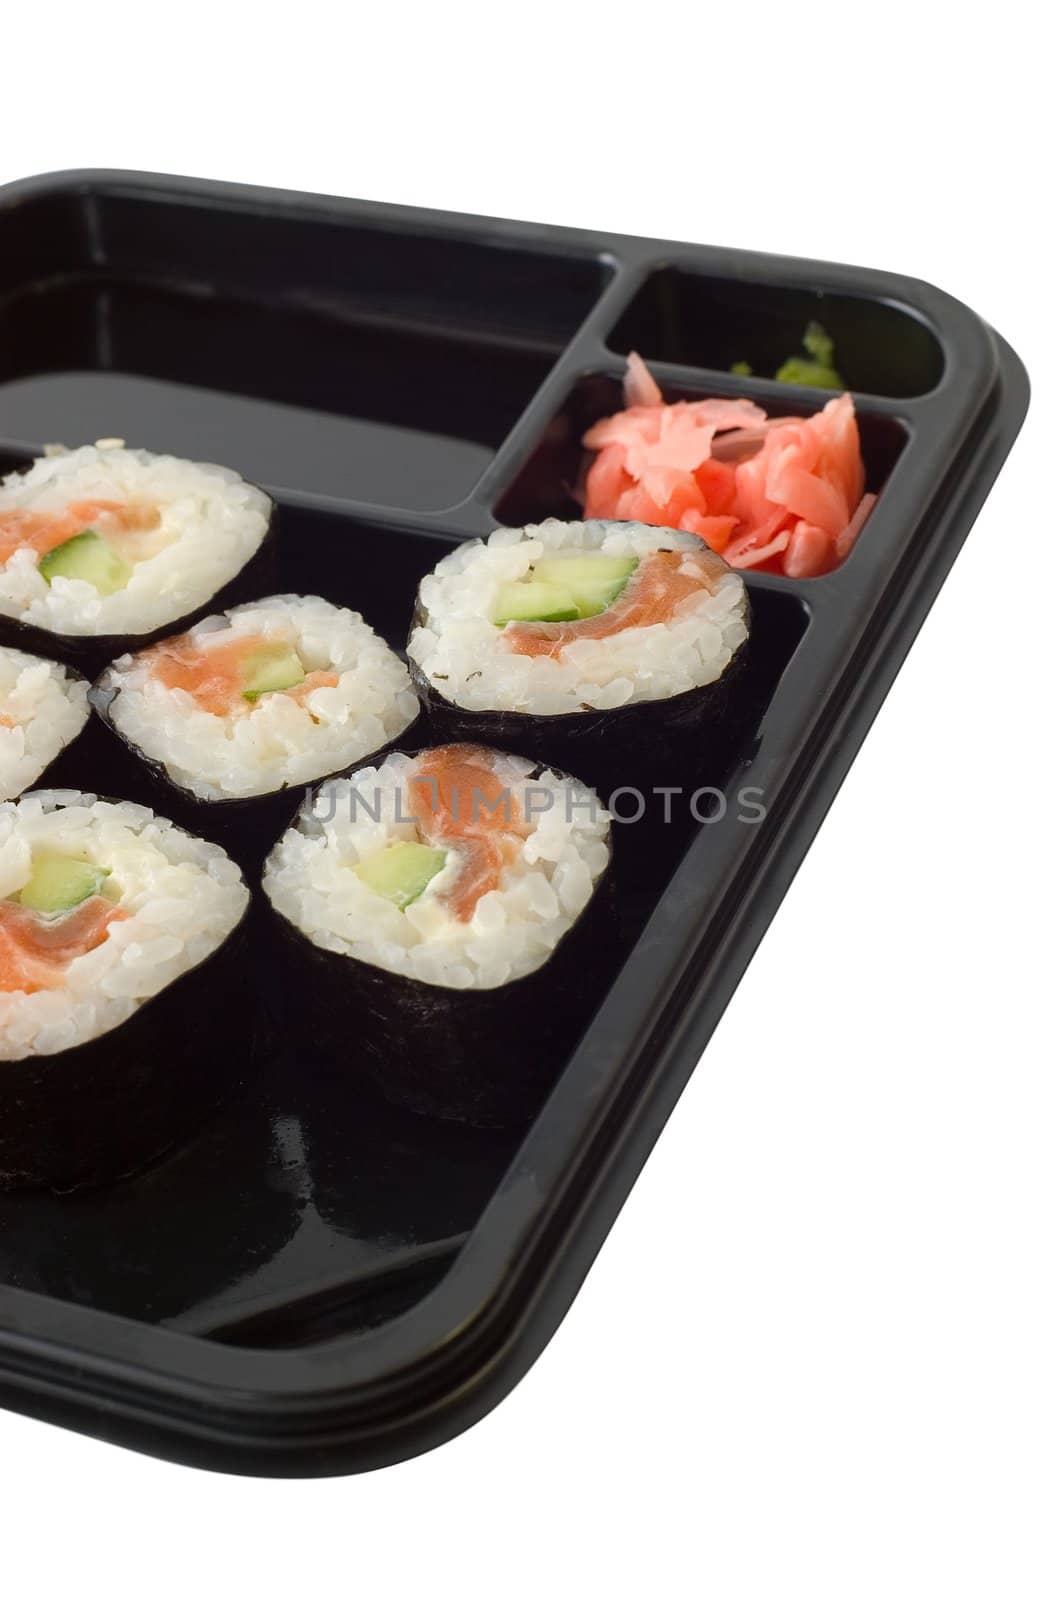 Sushi japanese food at table  on white background